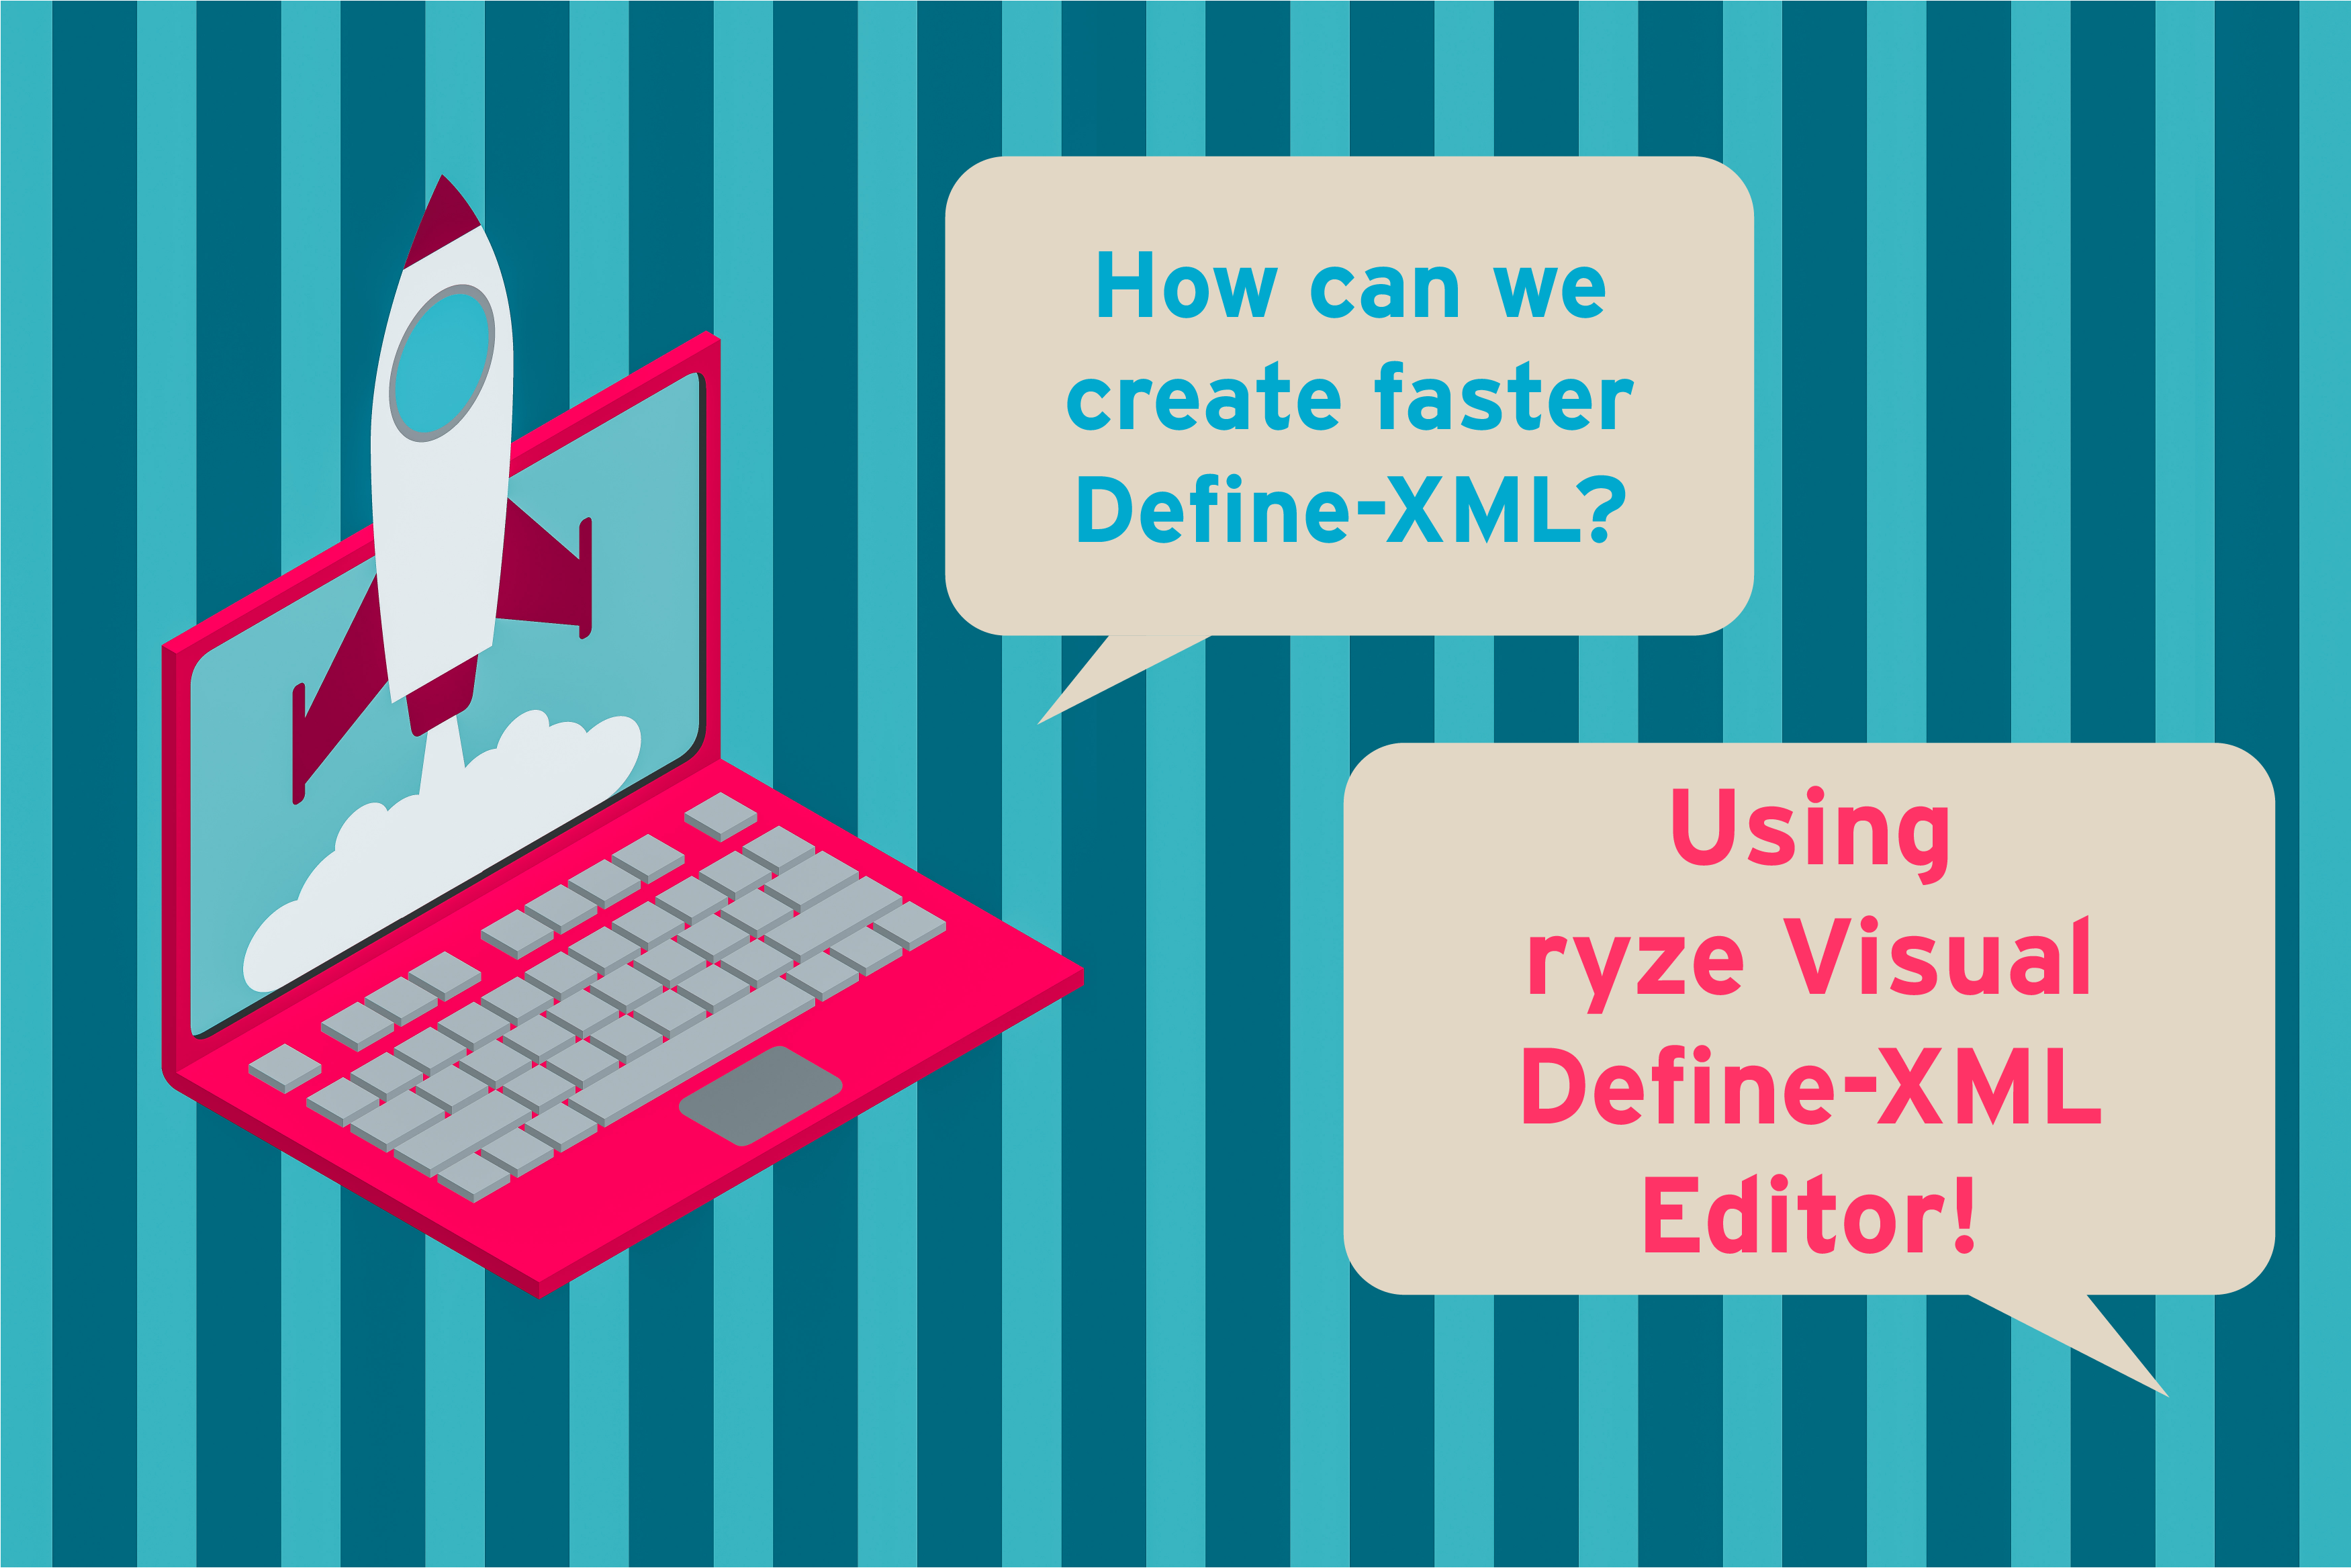 Faster-Define-XML-with-ryze